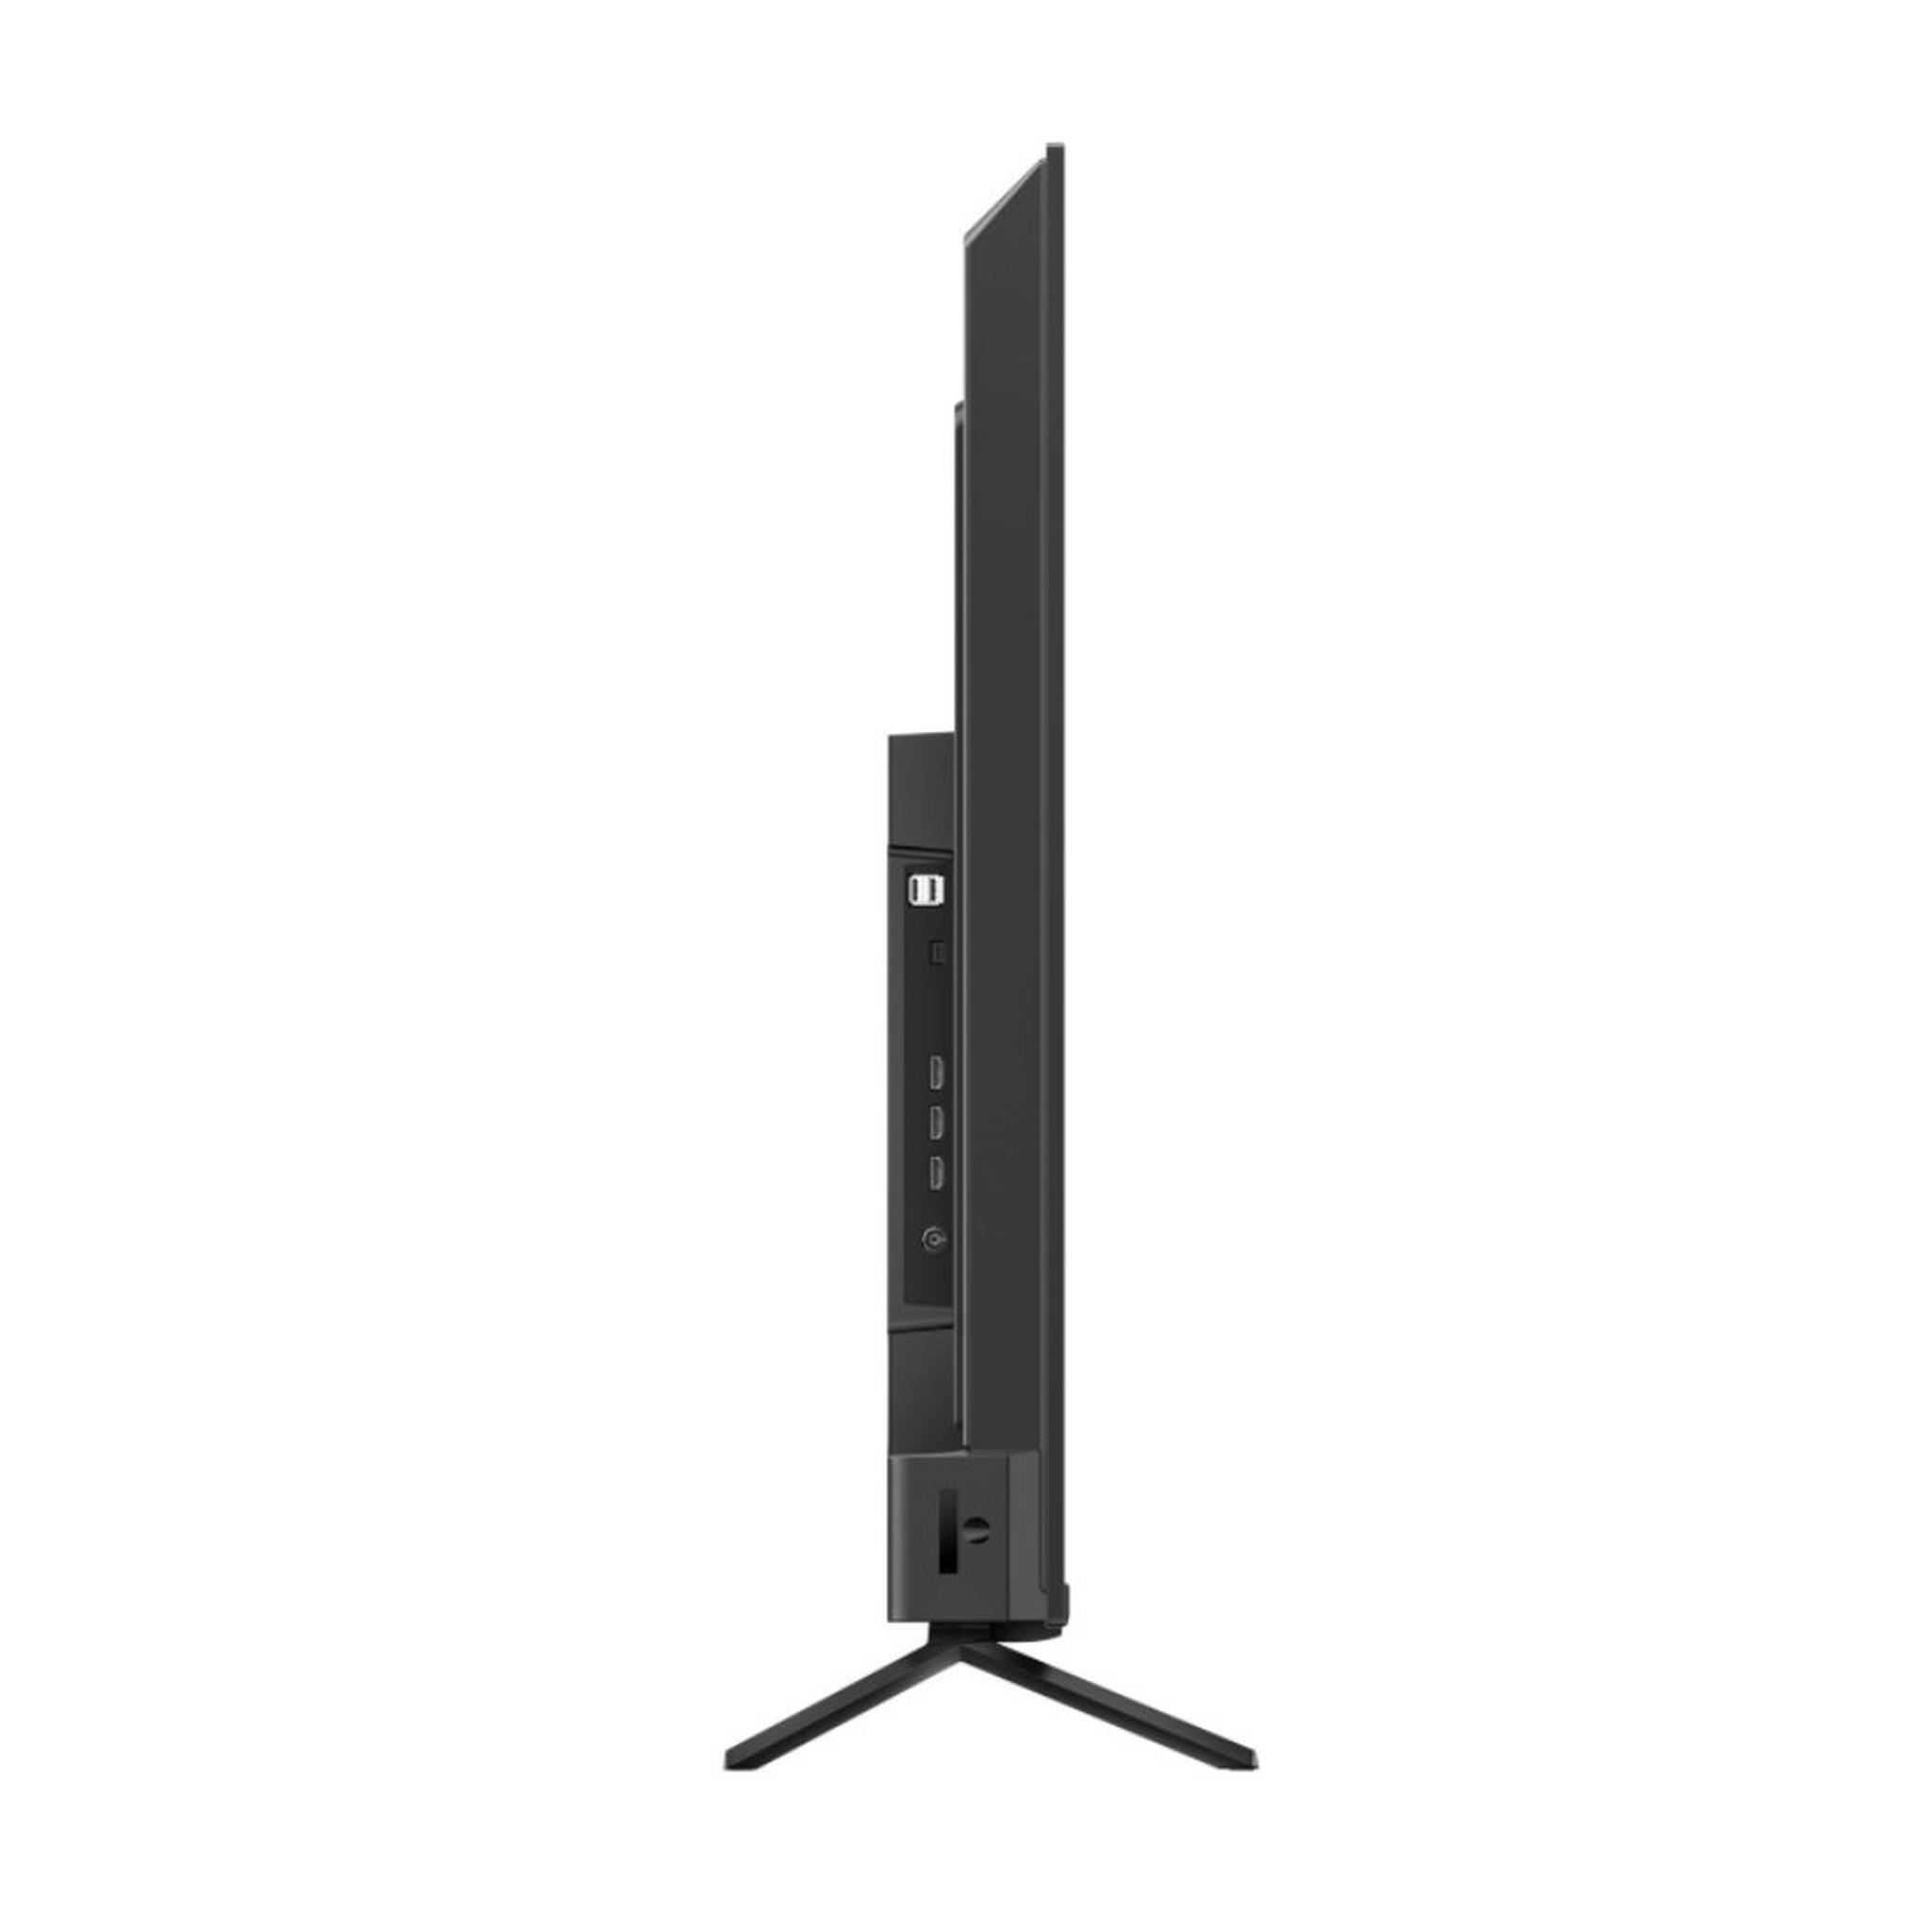 Philips 7400 series 55-Inches 4K UHD LED Google TV, 55PUT7428/56 – Black